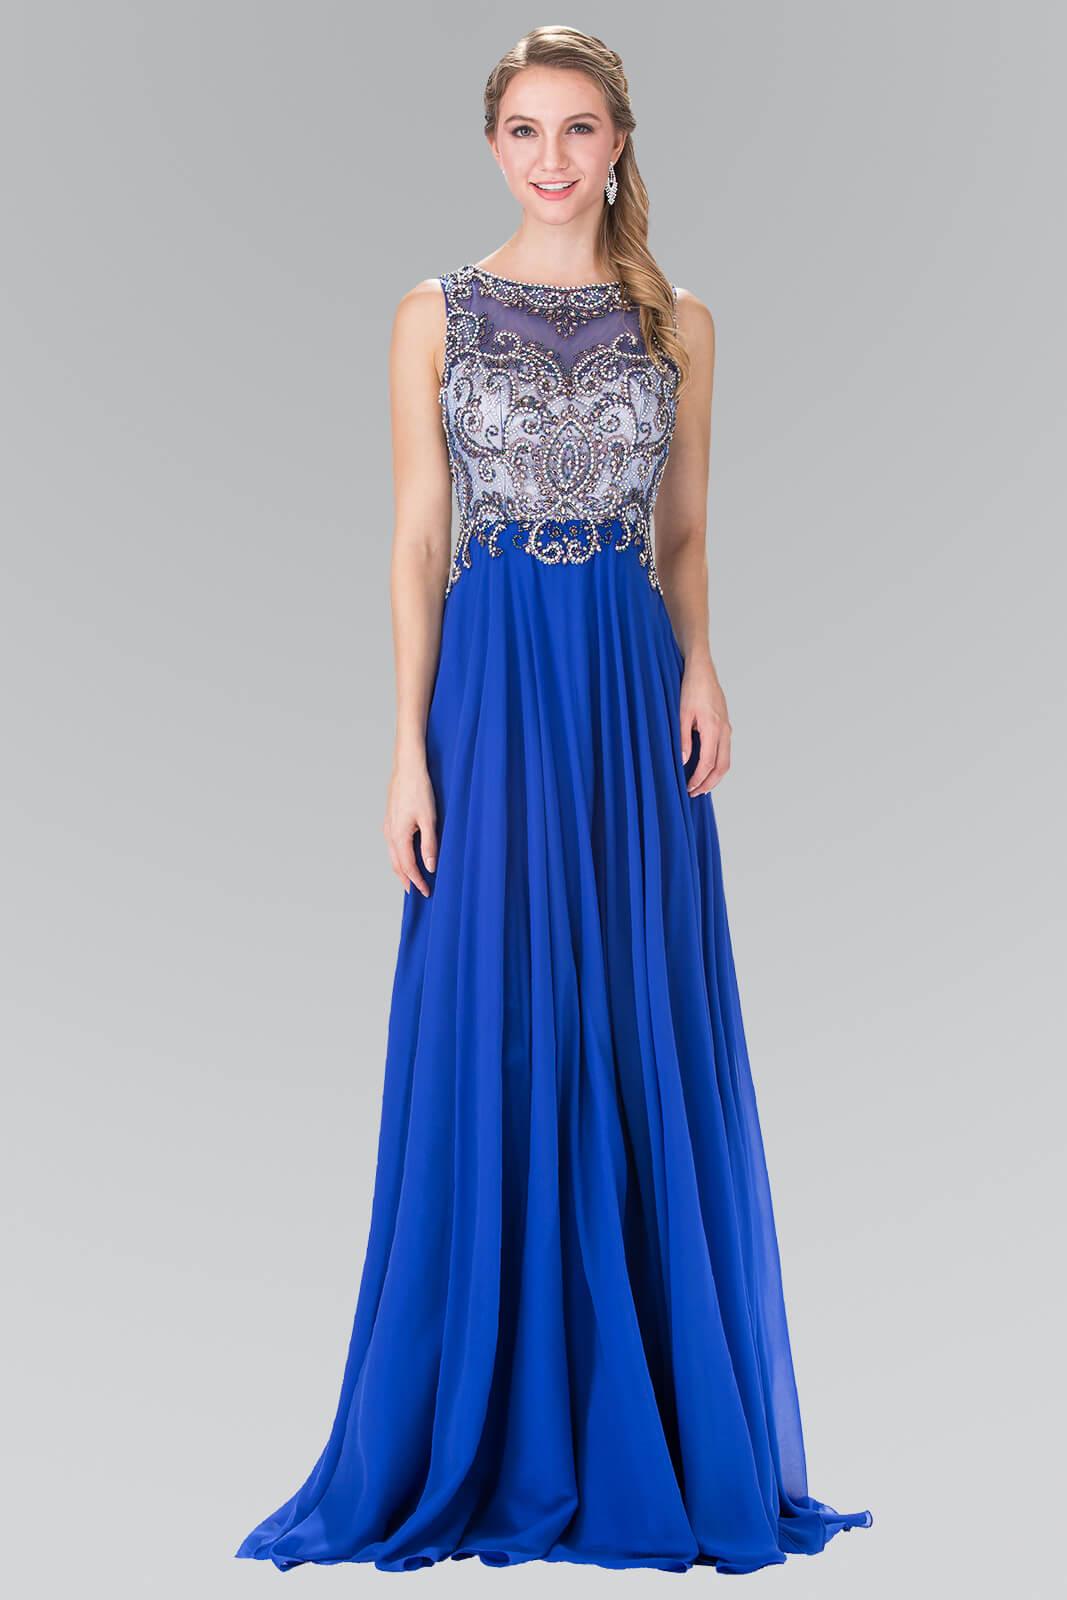 Prom Long Sleeveless Beaded Chiffon Evening Dress - The Dress Outlet Elizabeth K